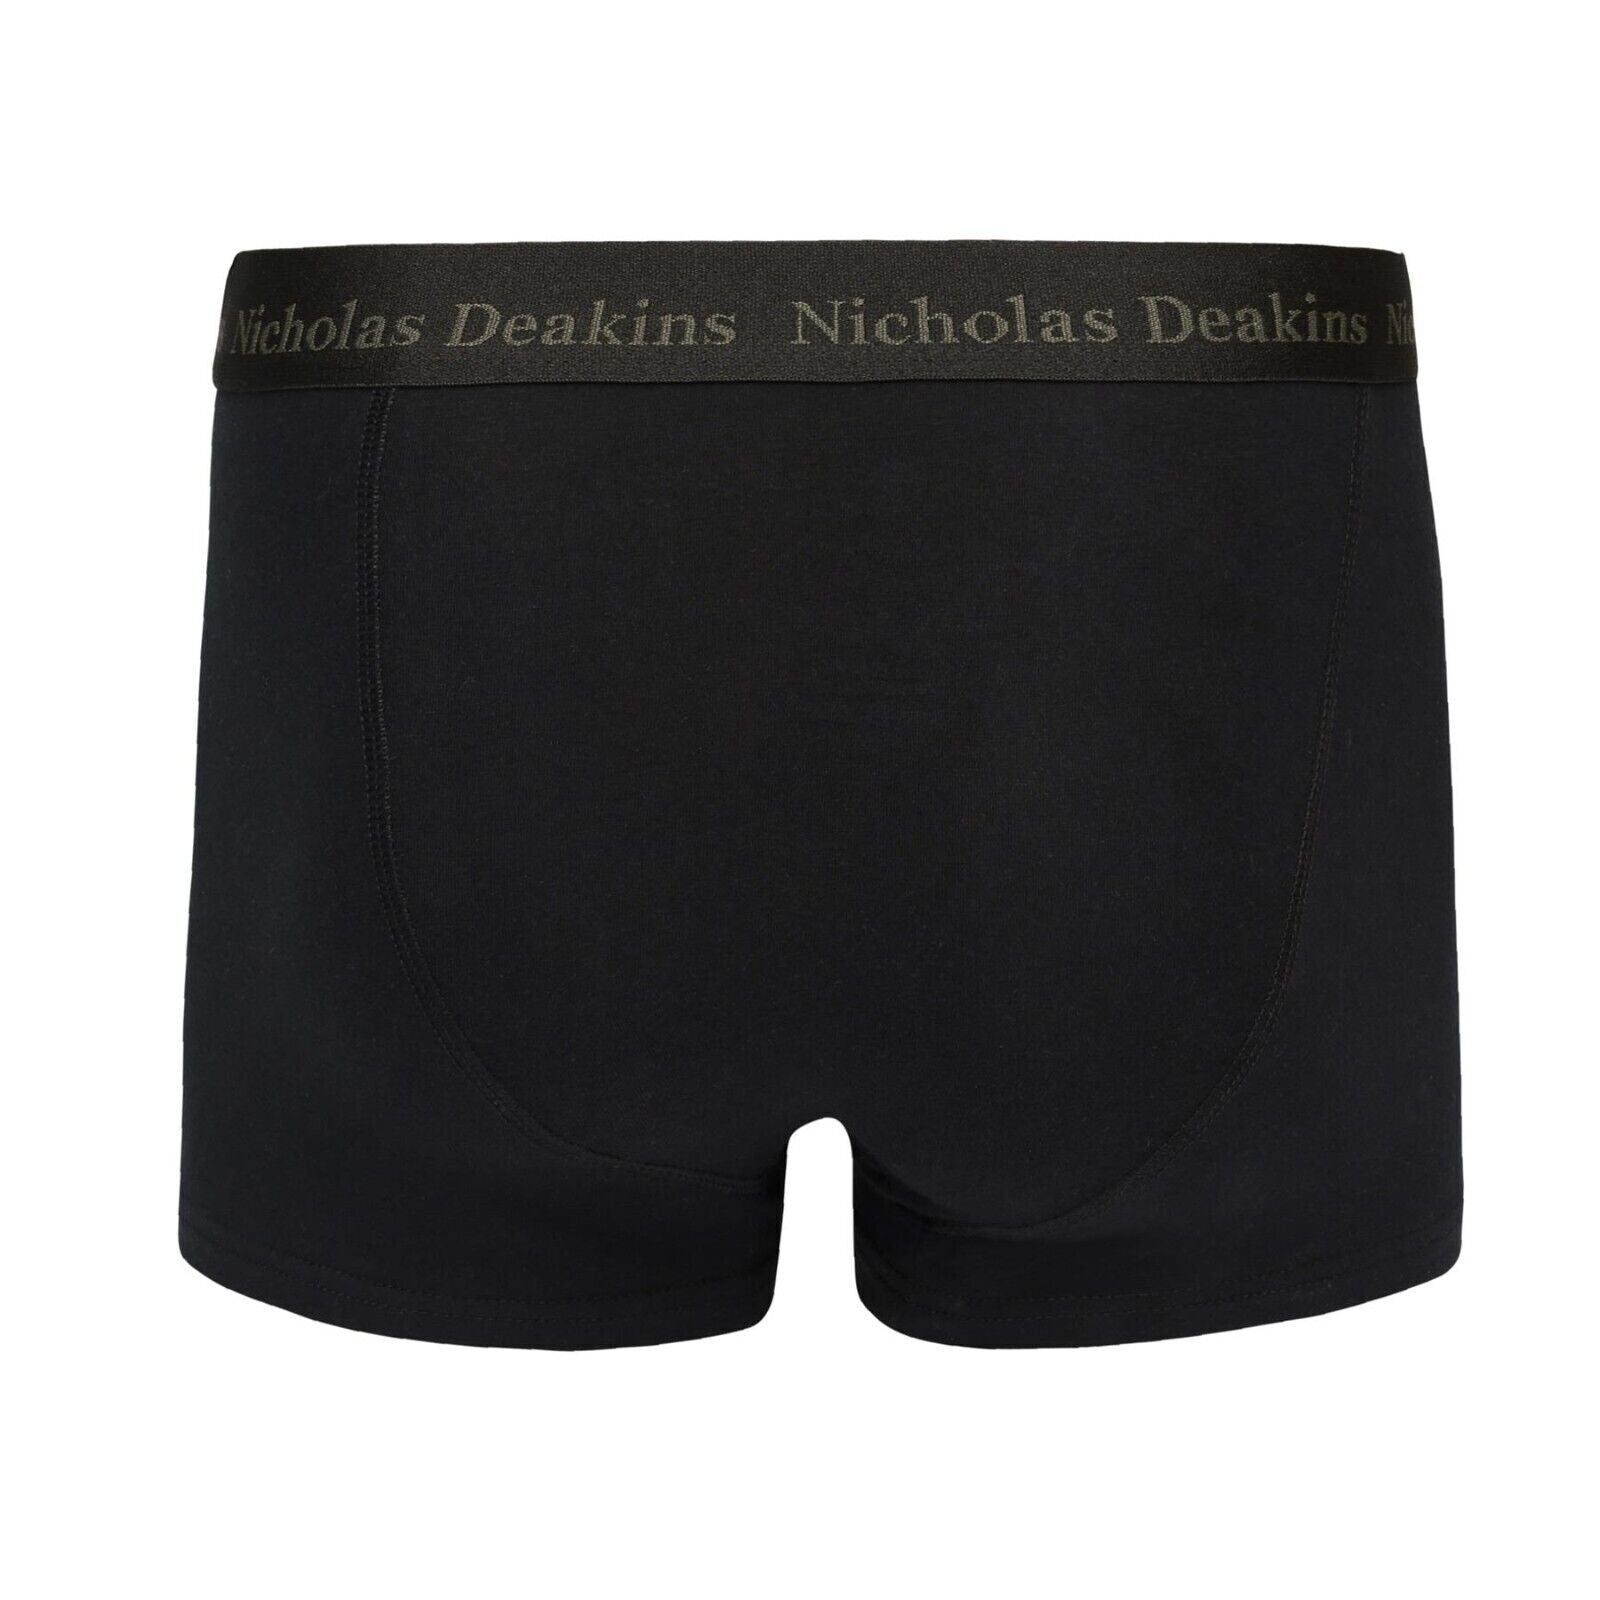 2 Pack Mens Deakins Boxer Shorts Cotton Stretch Black Grey Underwear Set S-XL